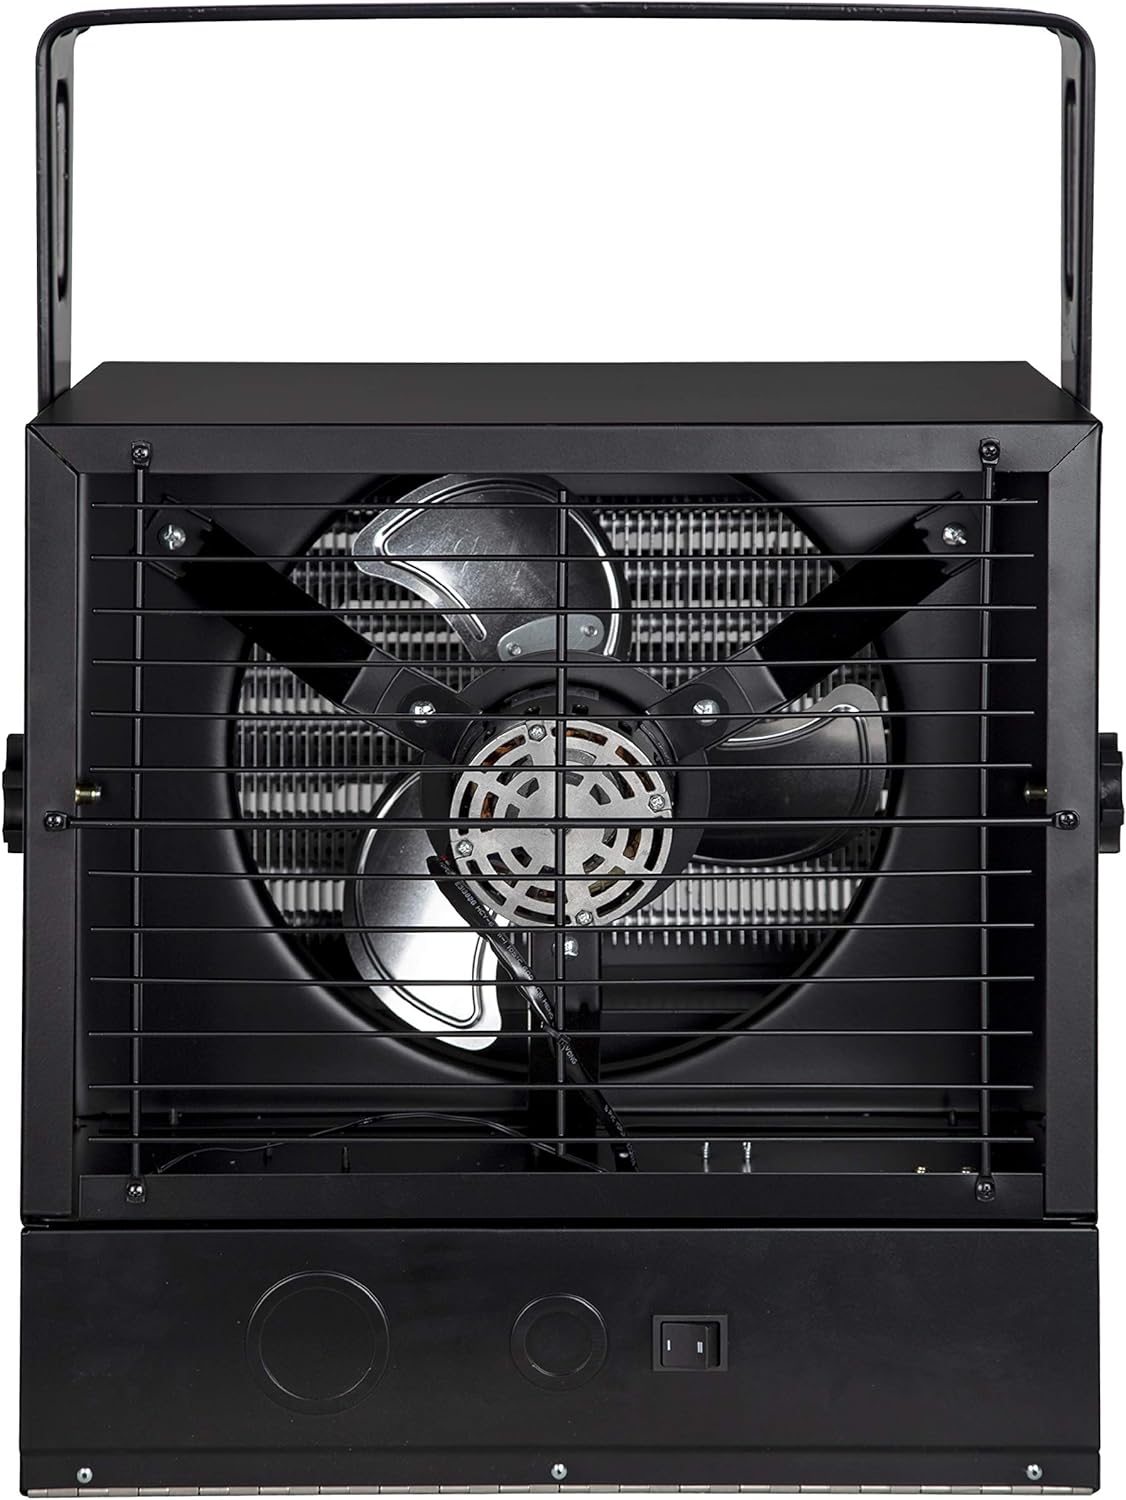 Dyna-Glo Dual Power 15,000W Electric Garage Heater, Black